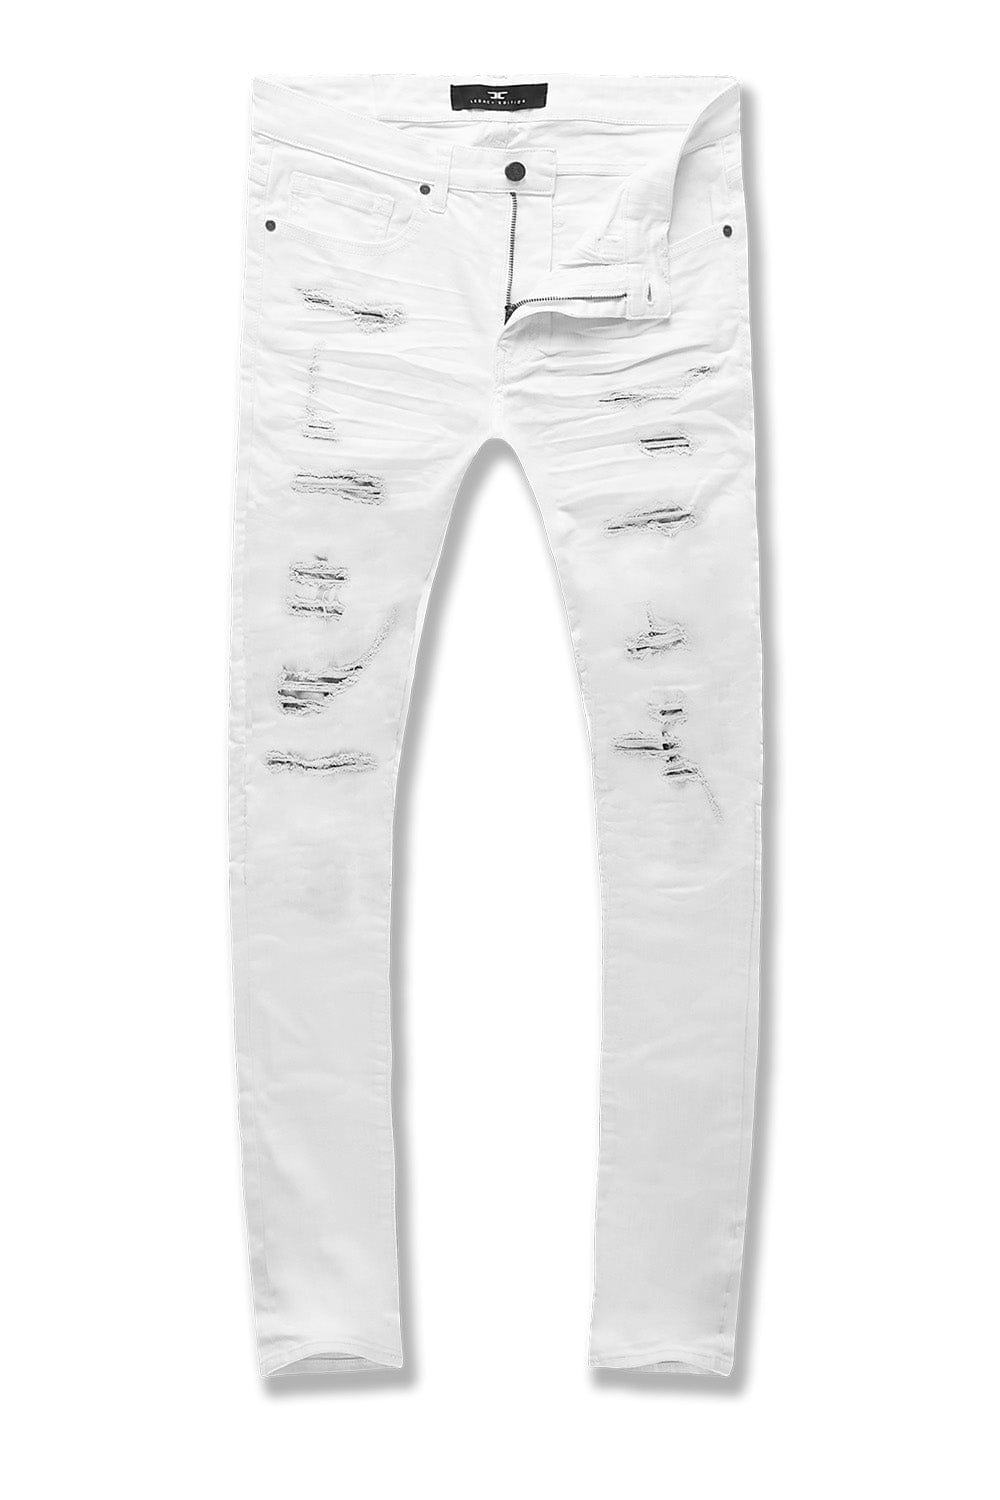 Jordan Craig Ross - Tribeca Twill Pants (White) White / 28/32